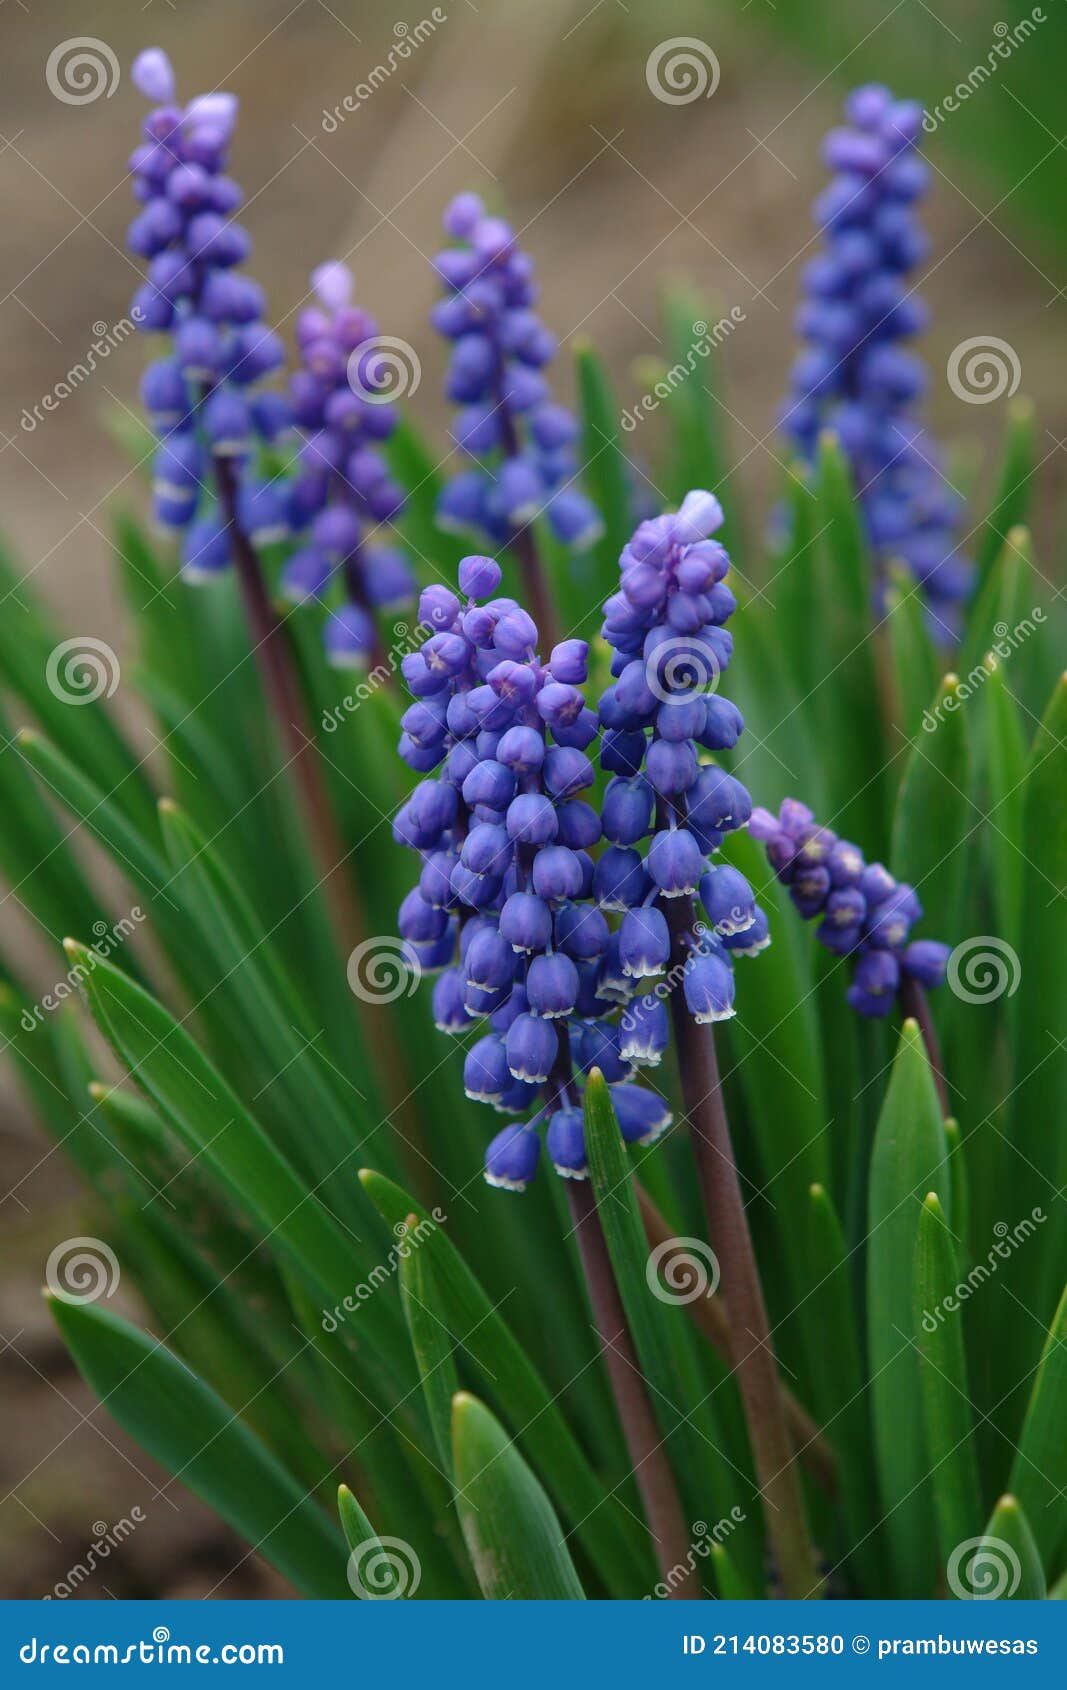 a close up of blue flowers of armenian grape hyacinth muscari armeniacum